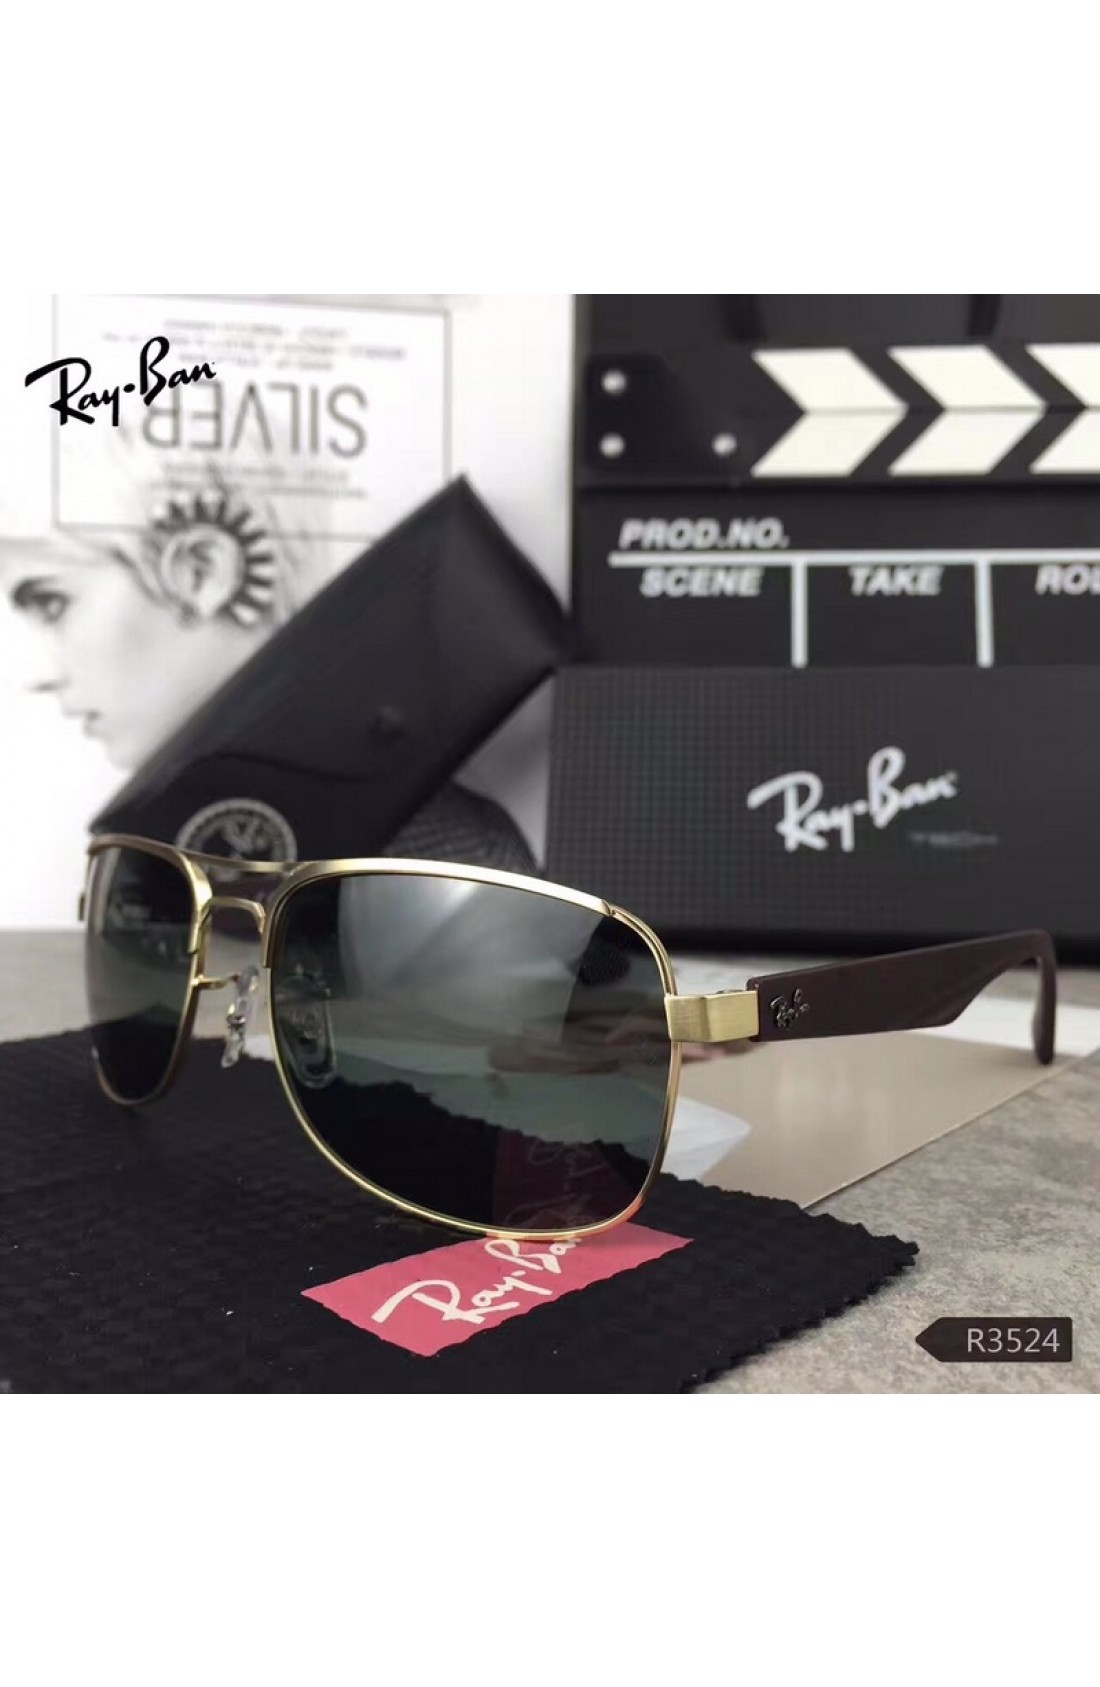 ray ban sunglasses black and gold